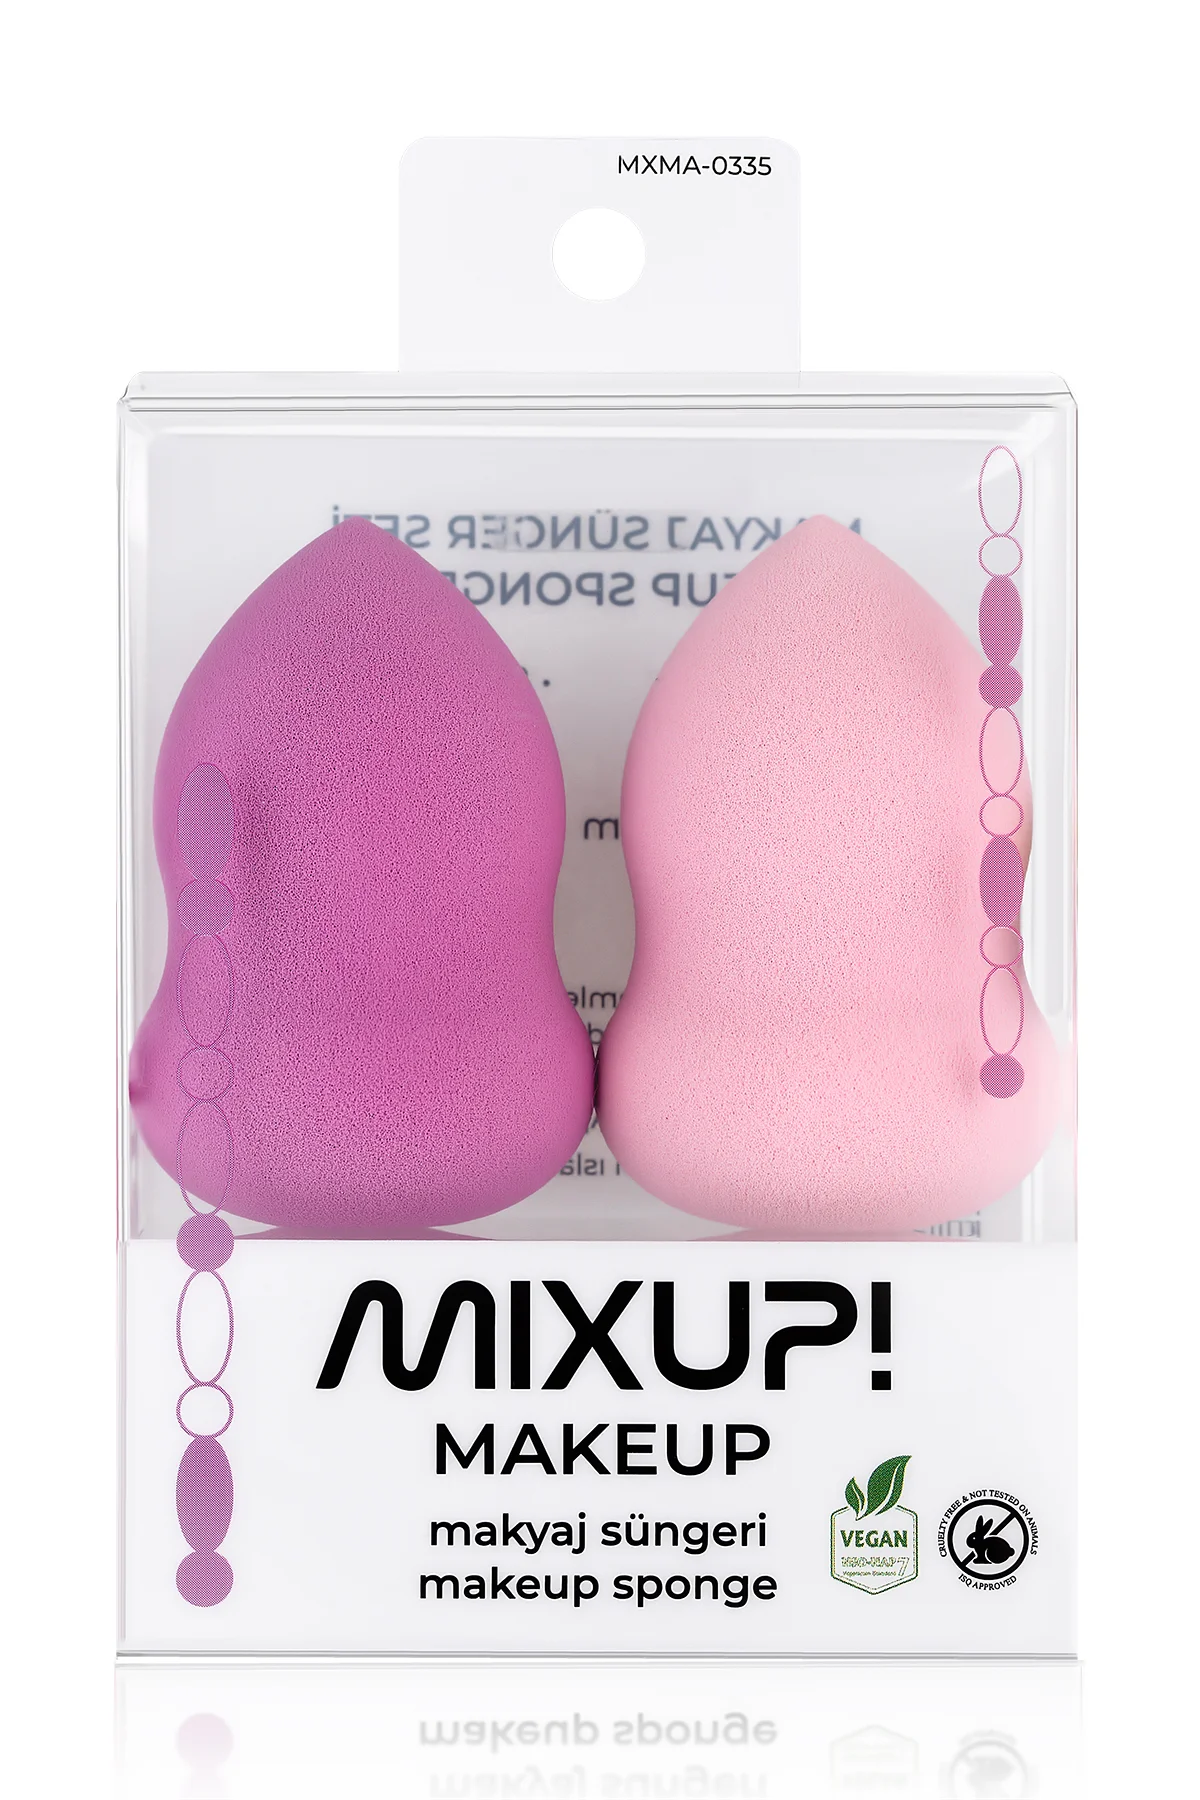 Mixup! Makeup Makyaj Süngeri 2'li